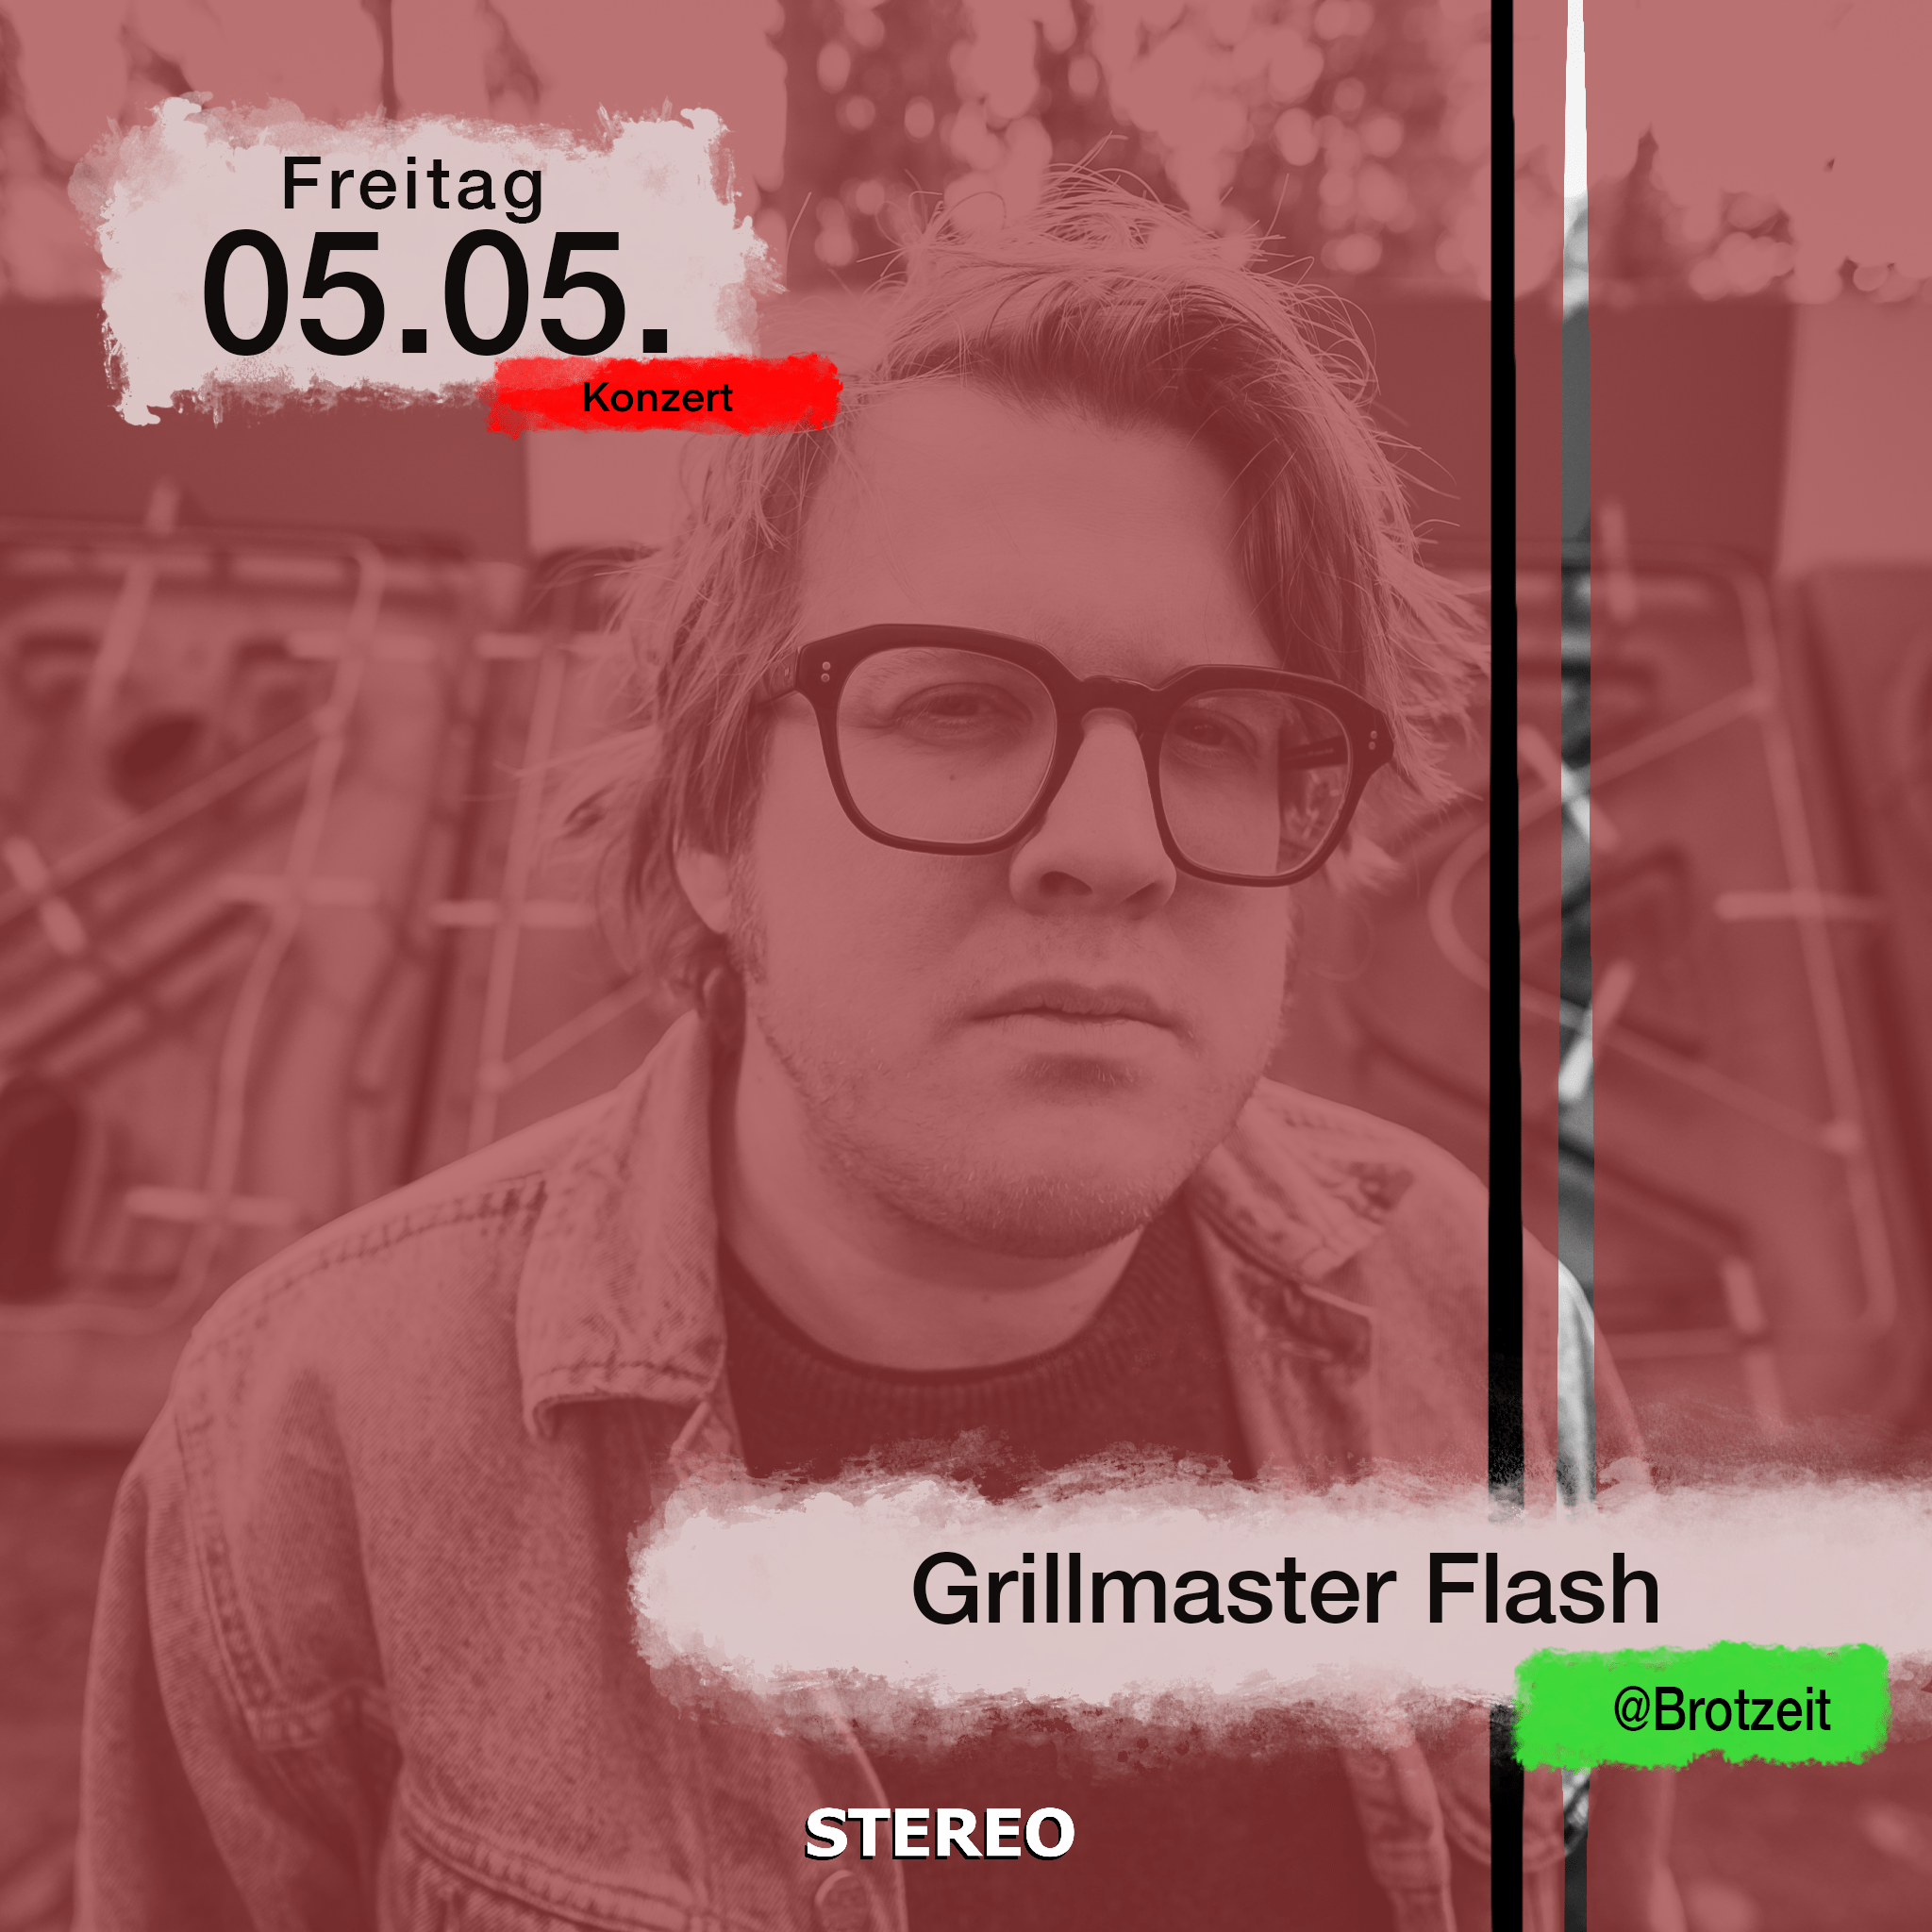 Grillmaster Flash